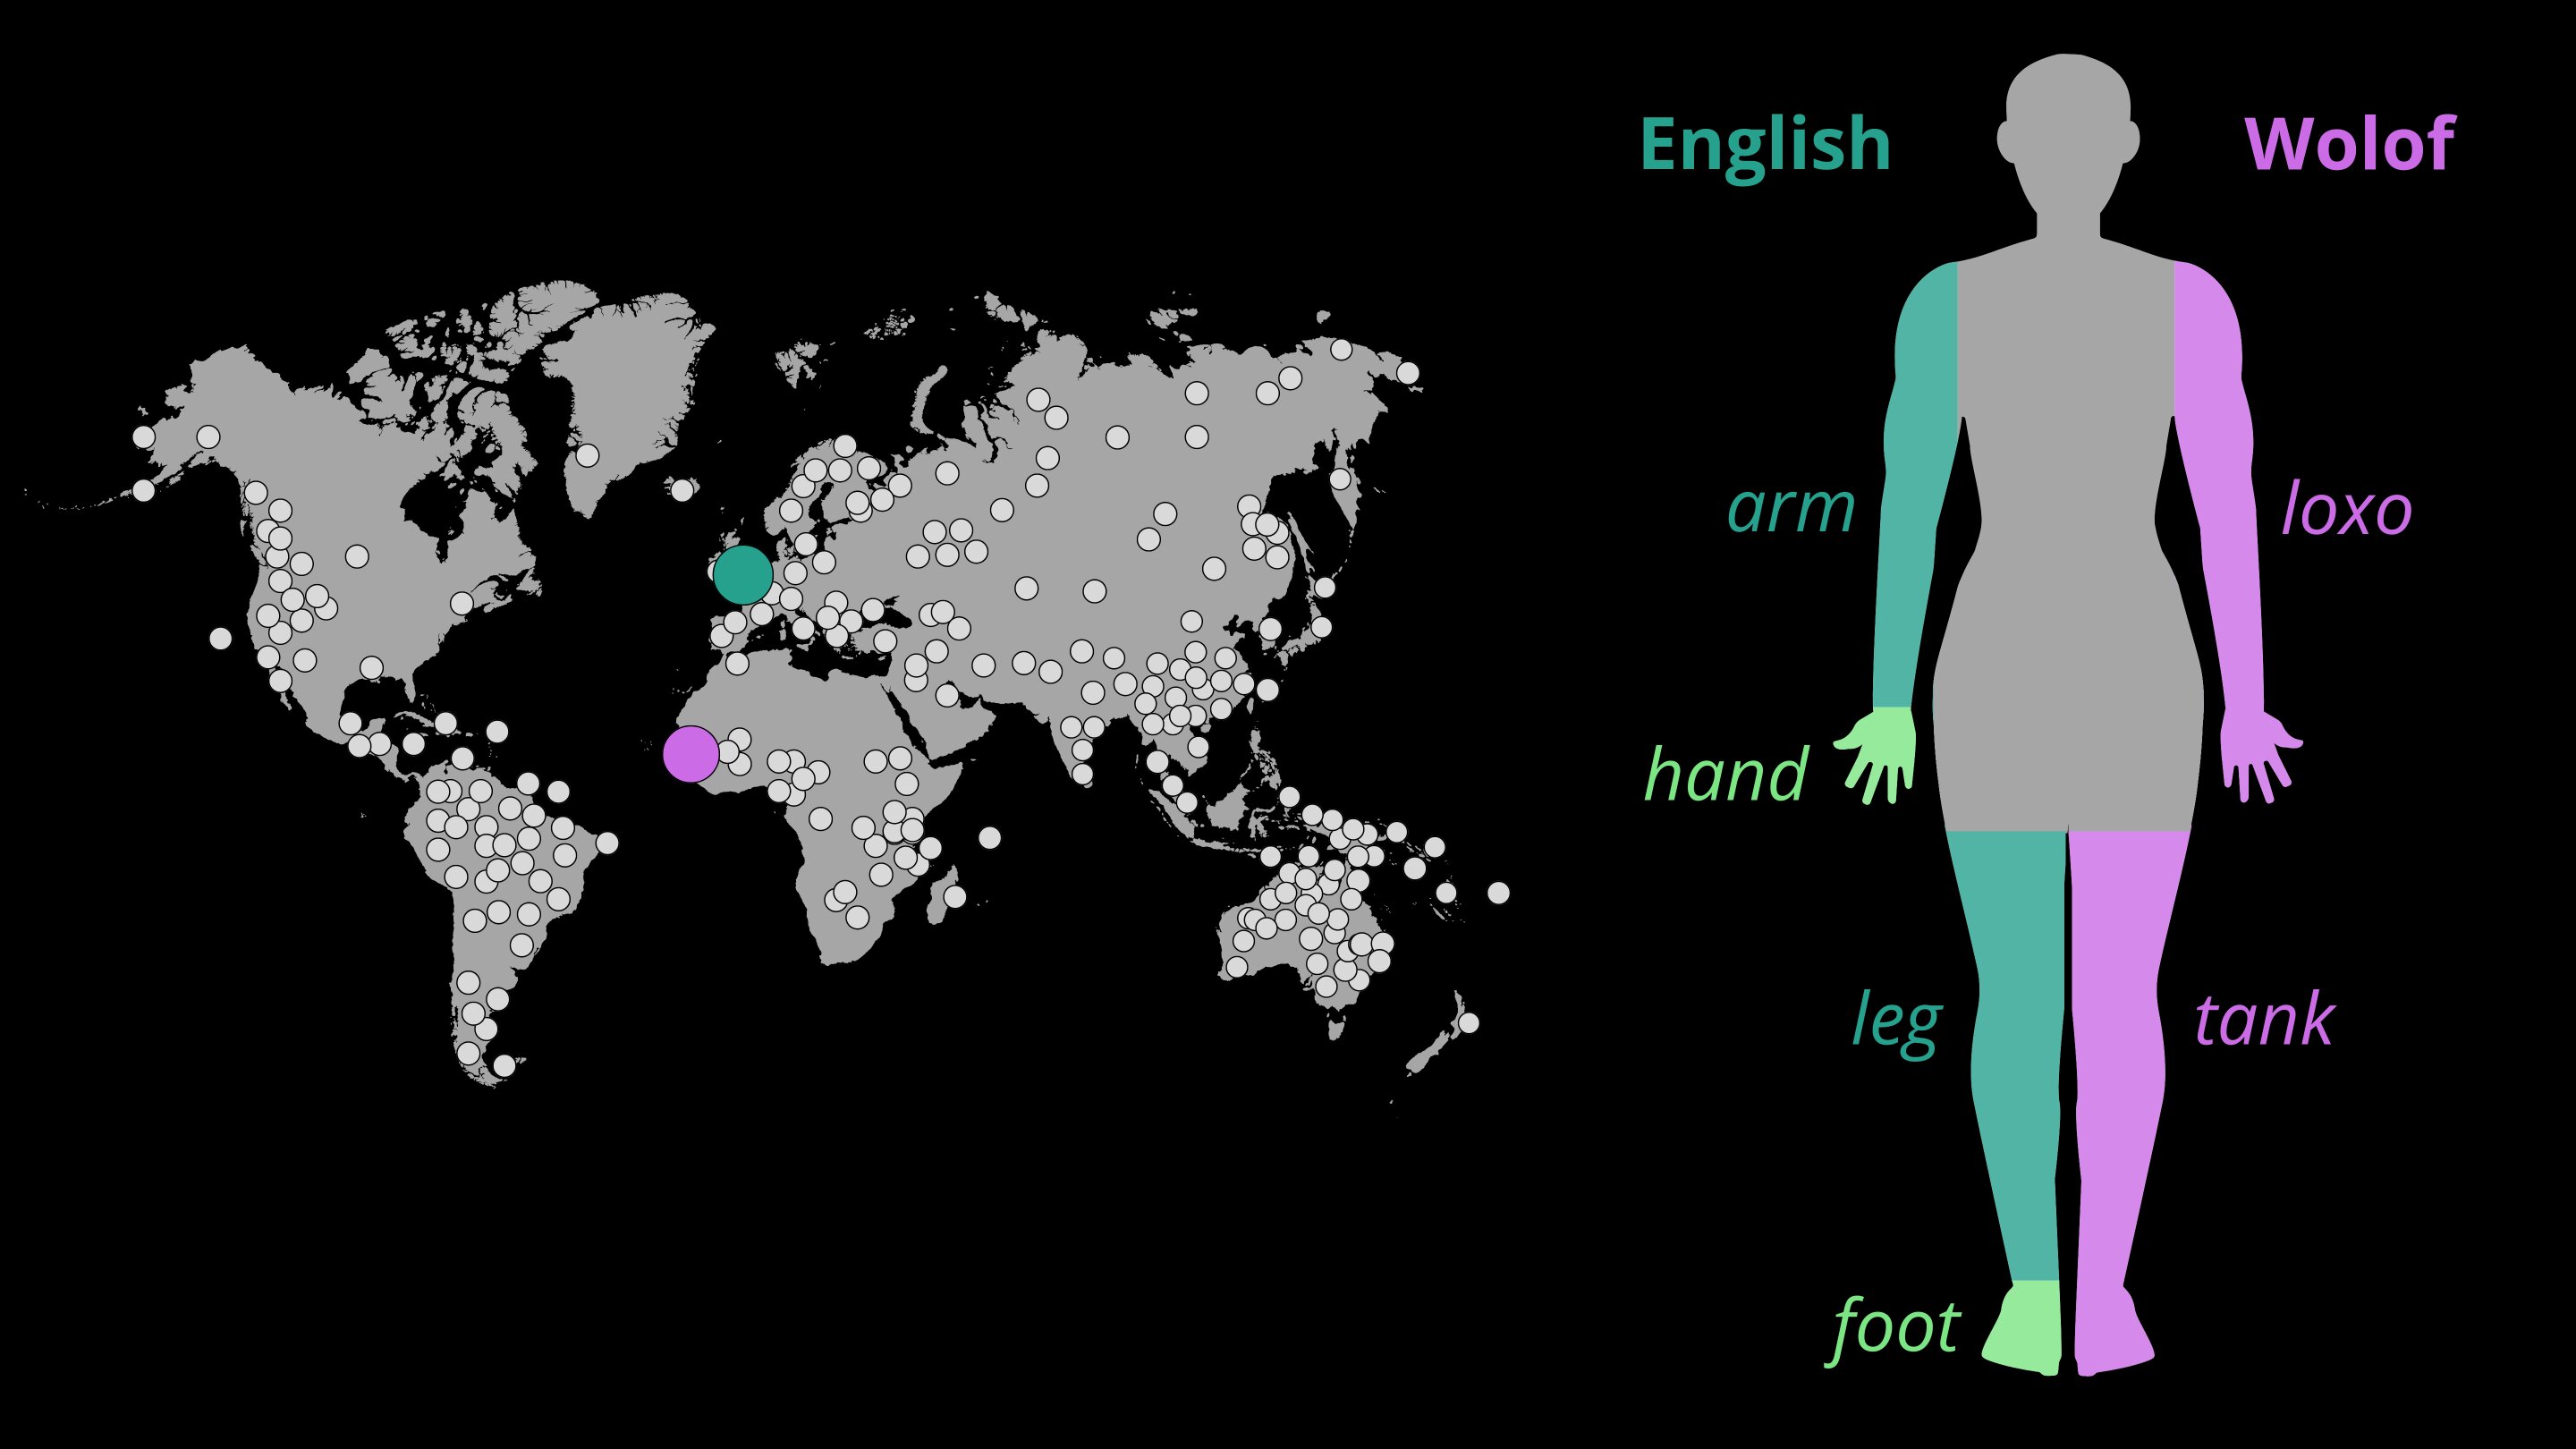 Researchers develop algorithms to understand how humans form body part vocabularies